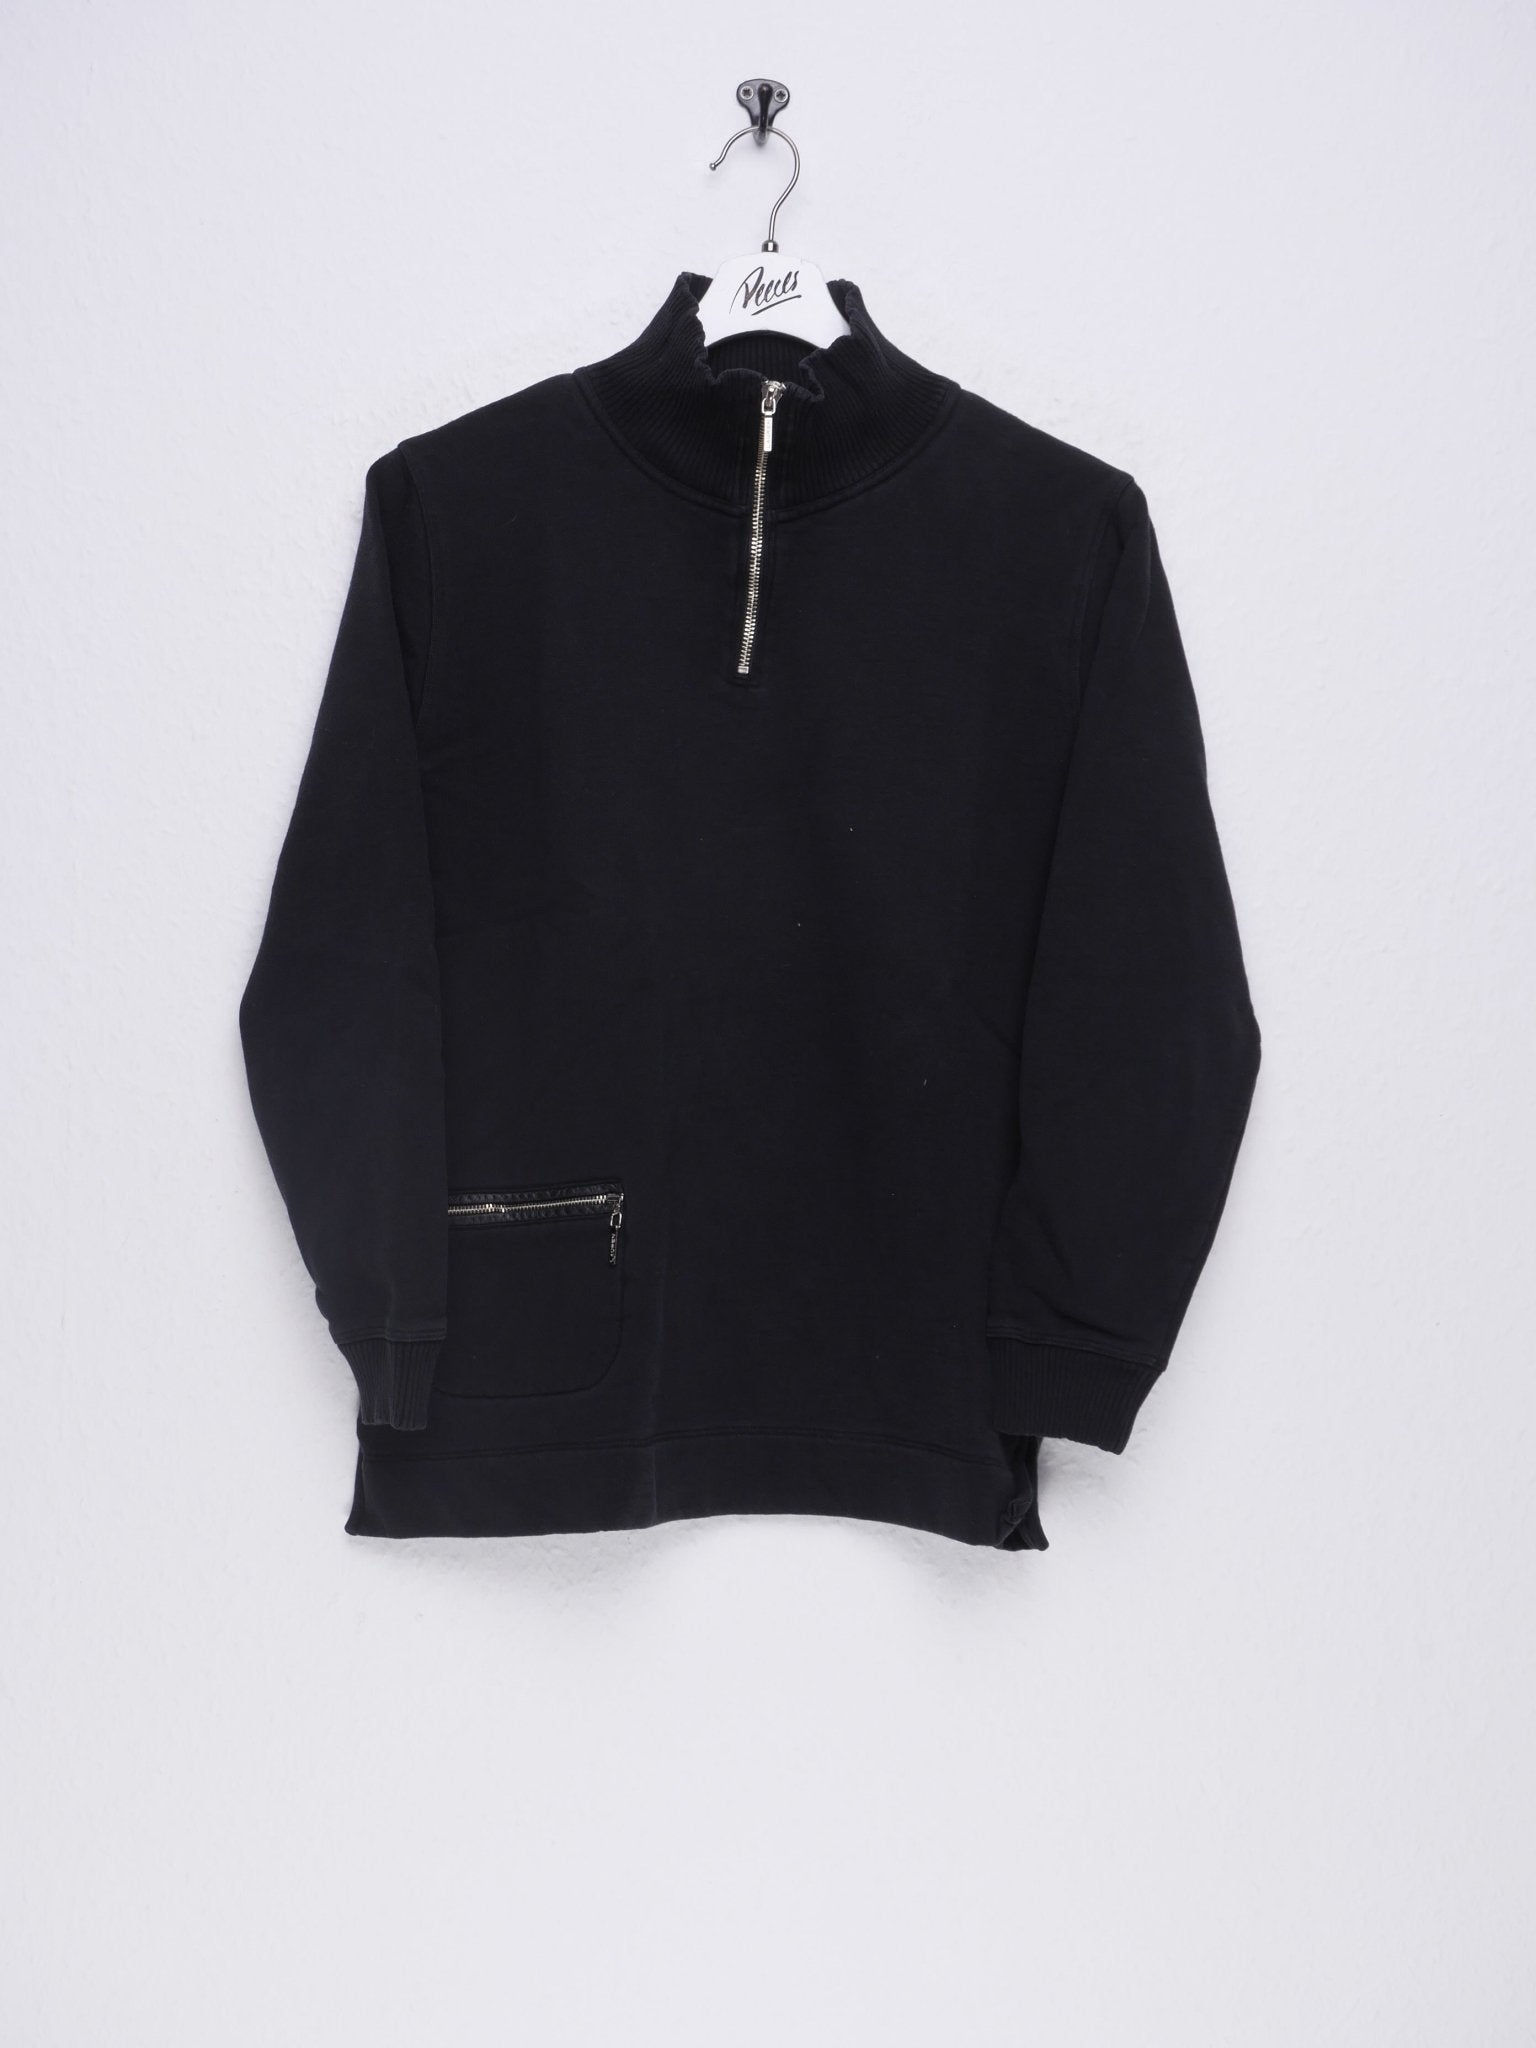 Polo Ralph Lauren plain black Vintage Half Zip Sweater - Peeces